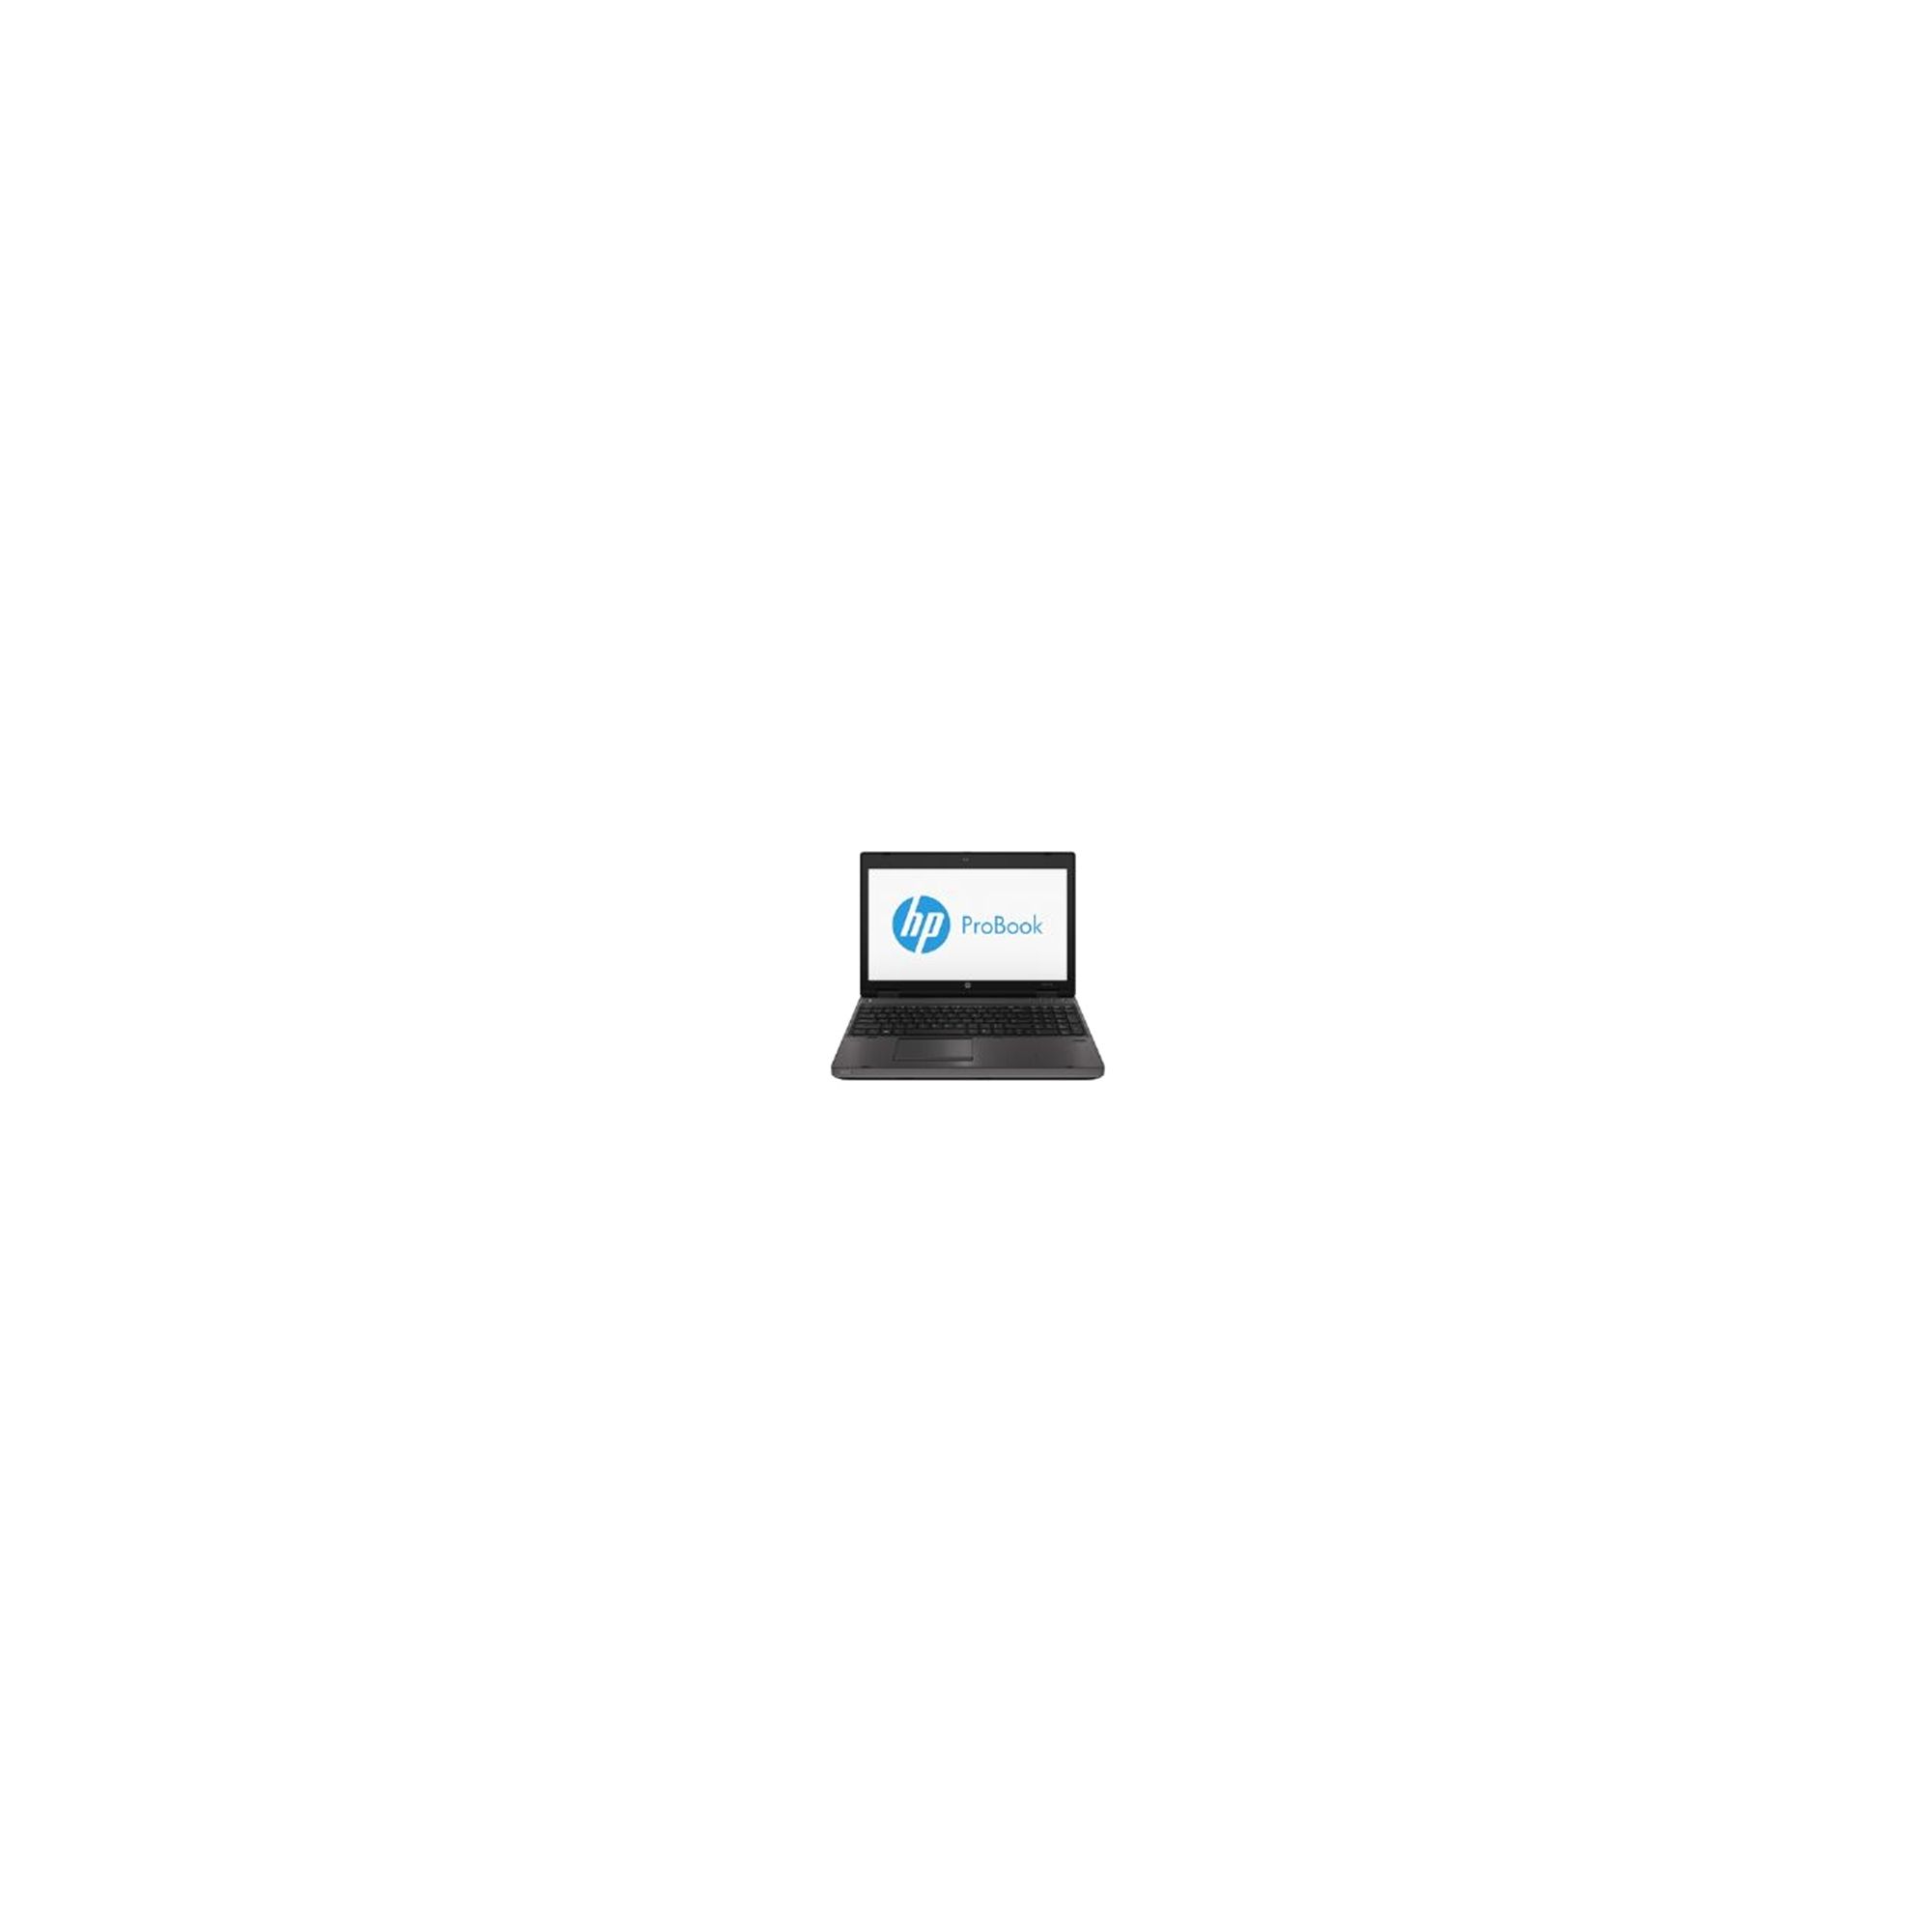 HP ProBook 6570b (15.6 inch) Notebook Core i5 (3210M) 2.5GHz 4GB 500GB DVD±RW SM DL WLAN BT Webcam Windows 7 Pro 64-bit (Intel HD Graphics) at Tesco Direct